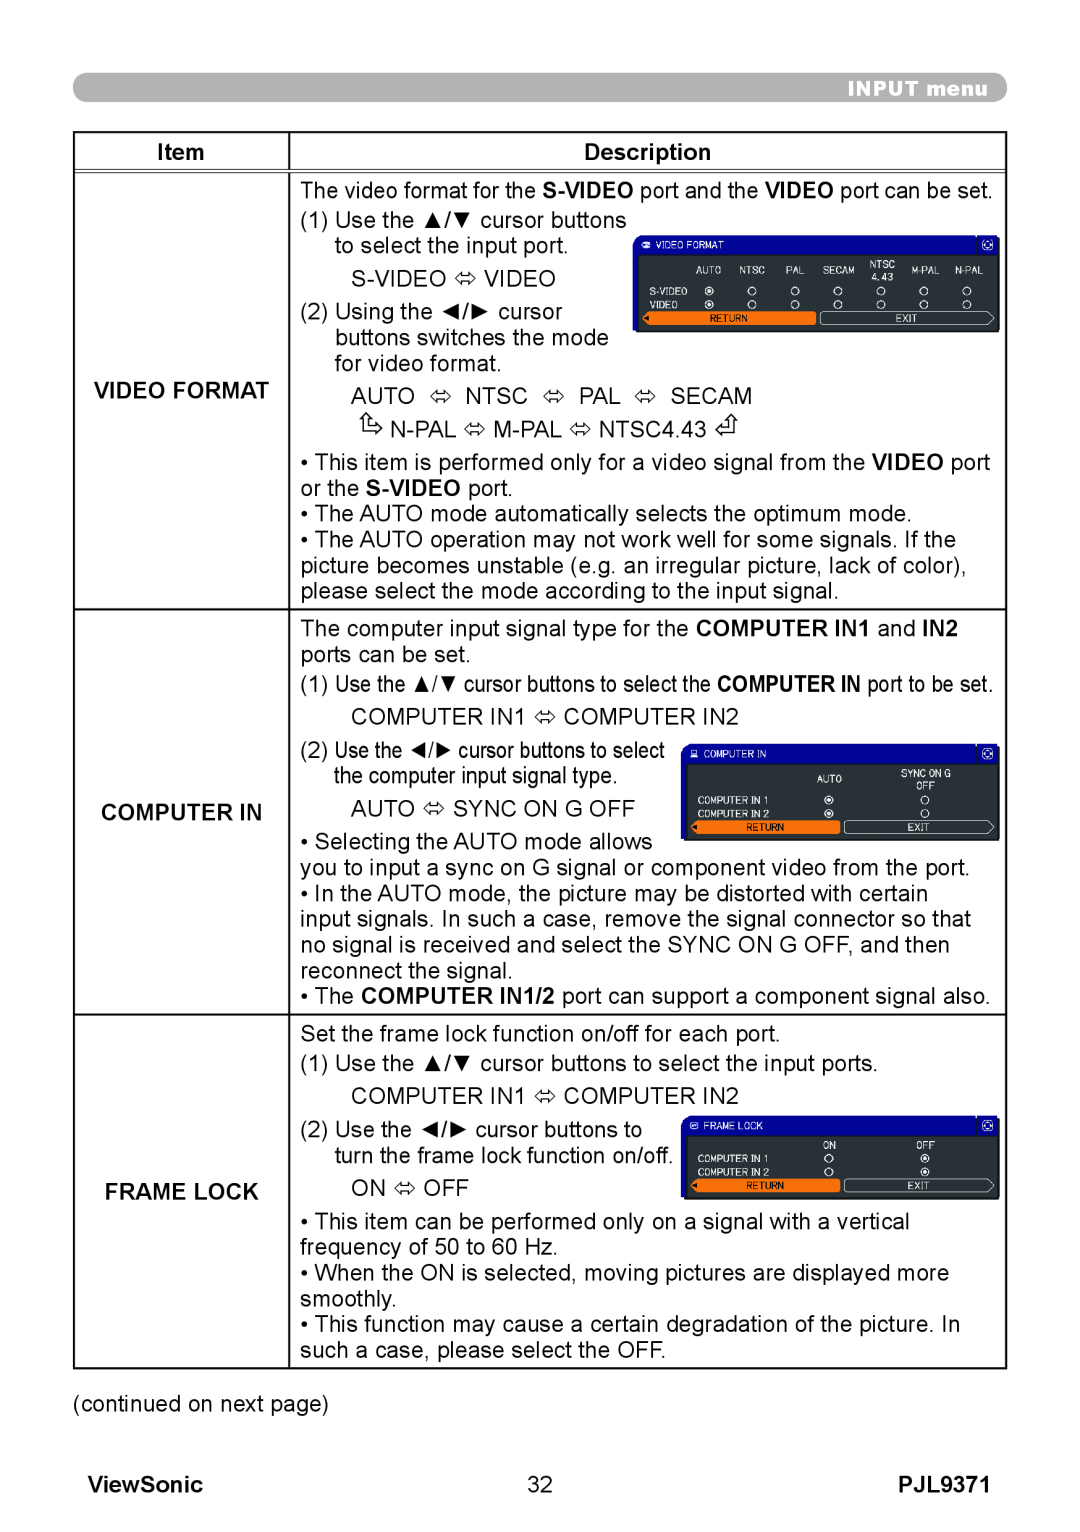 ViewSonic pjl9371 manual Description, Video Format, Computer In, Frame Lock, ViewSonic 